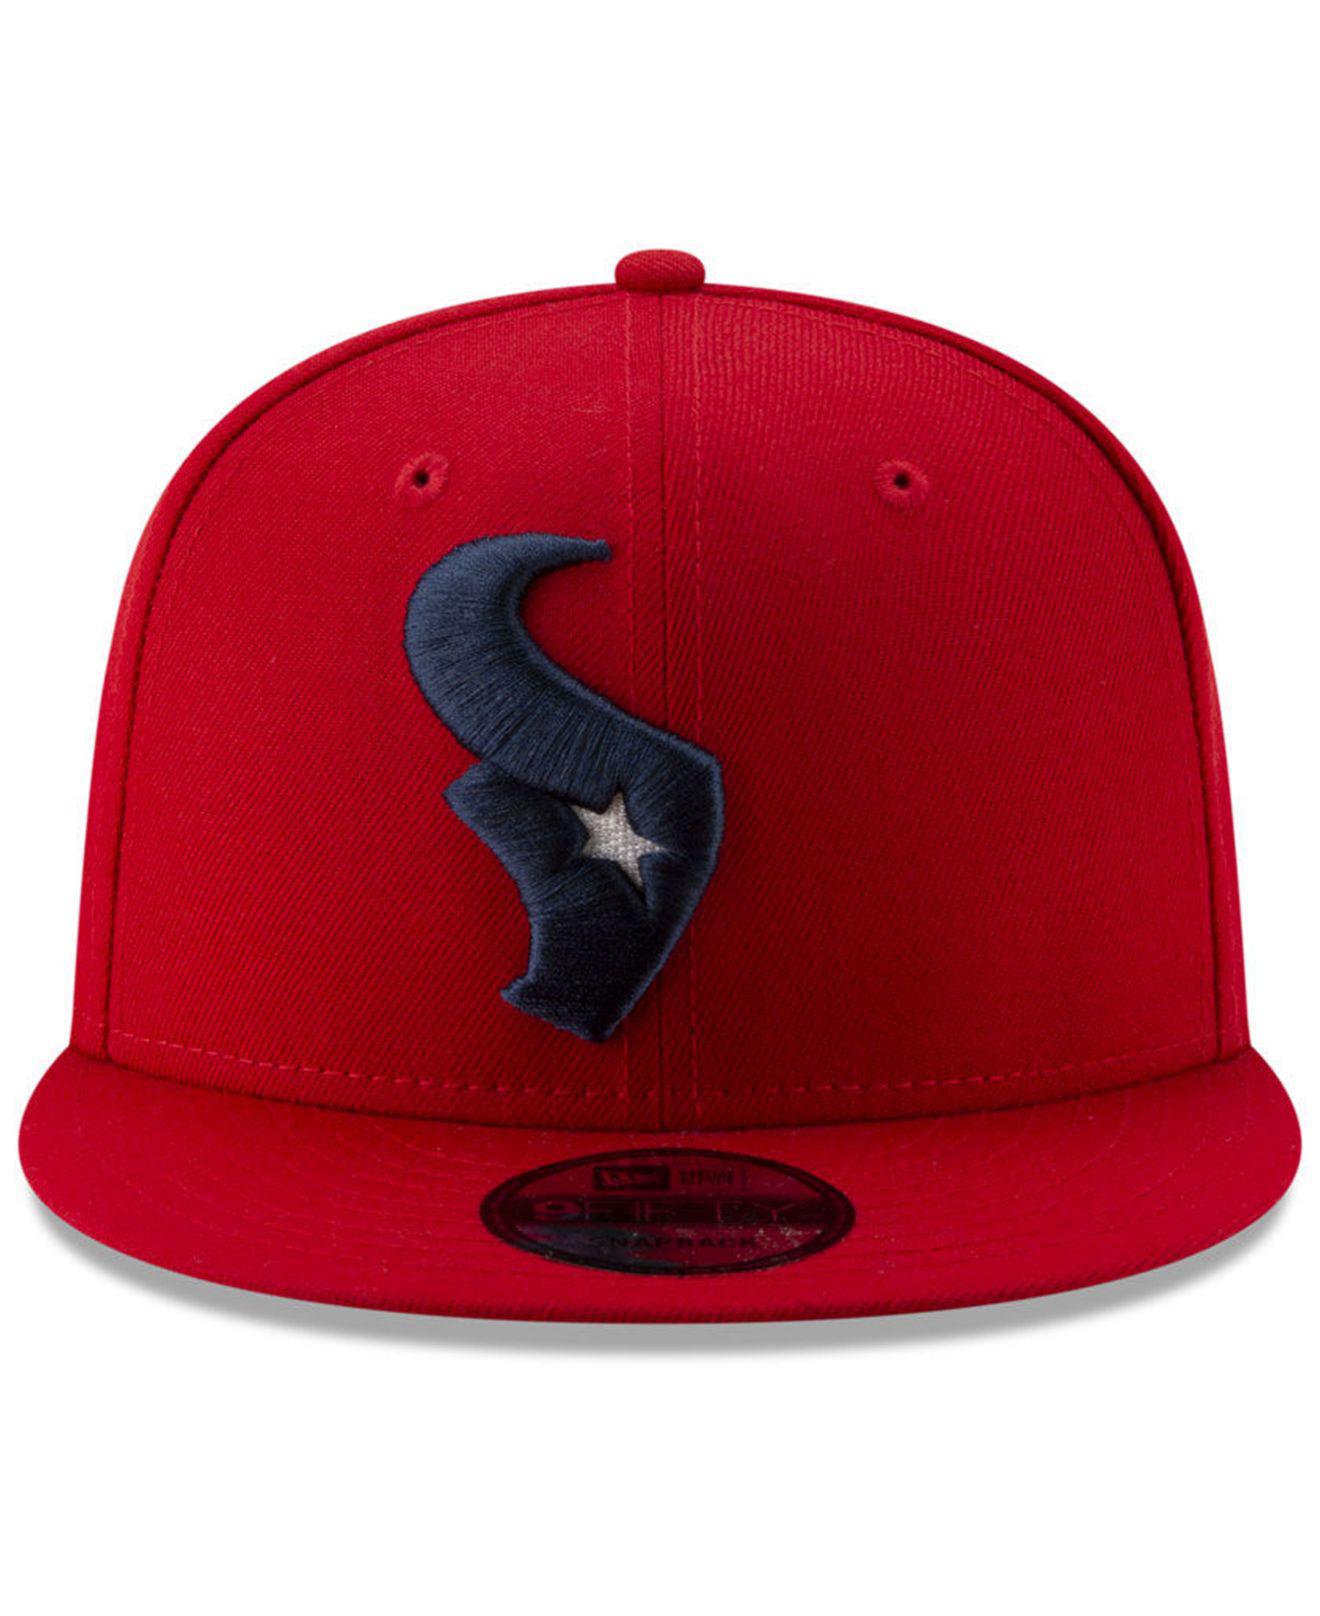 Houston Texans Logo Elements Collection 9fifty Snapback Cap